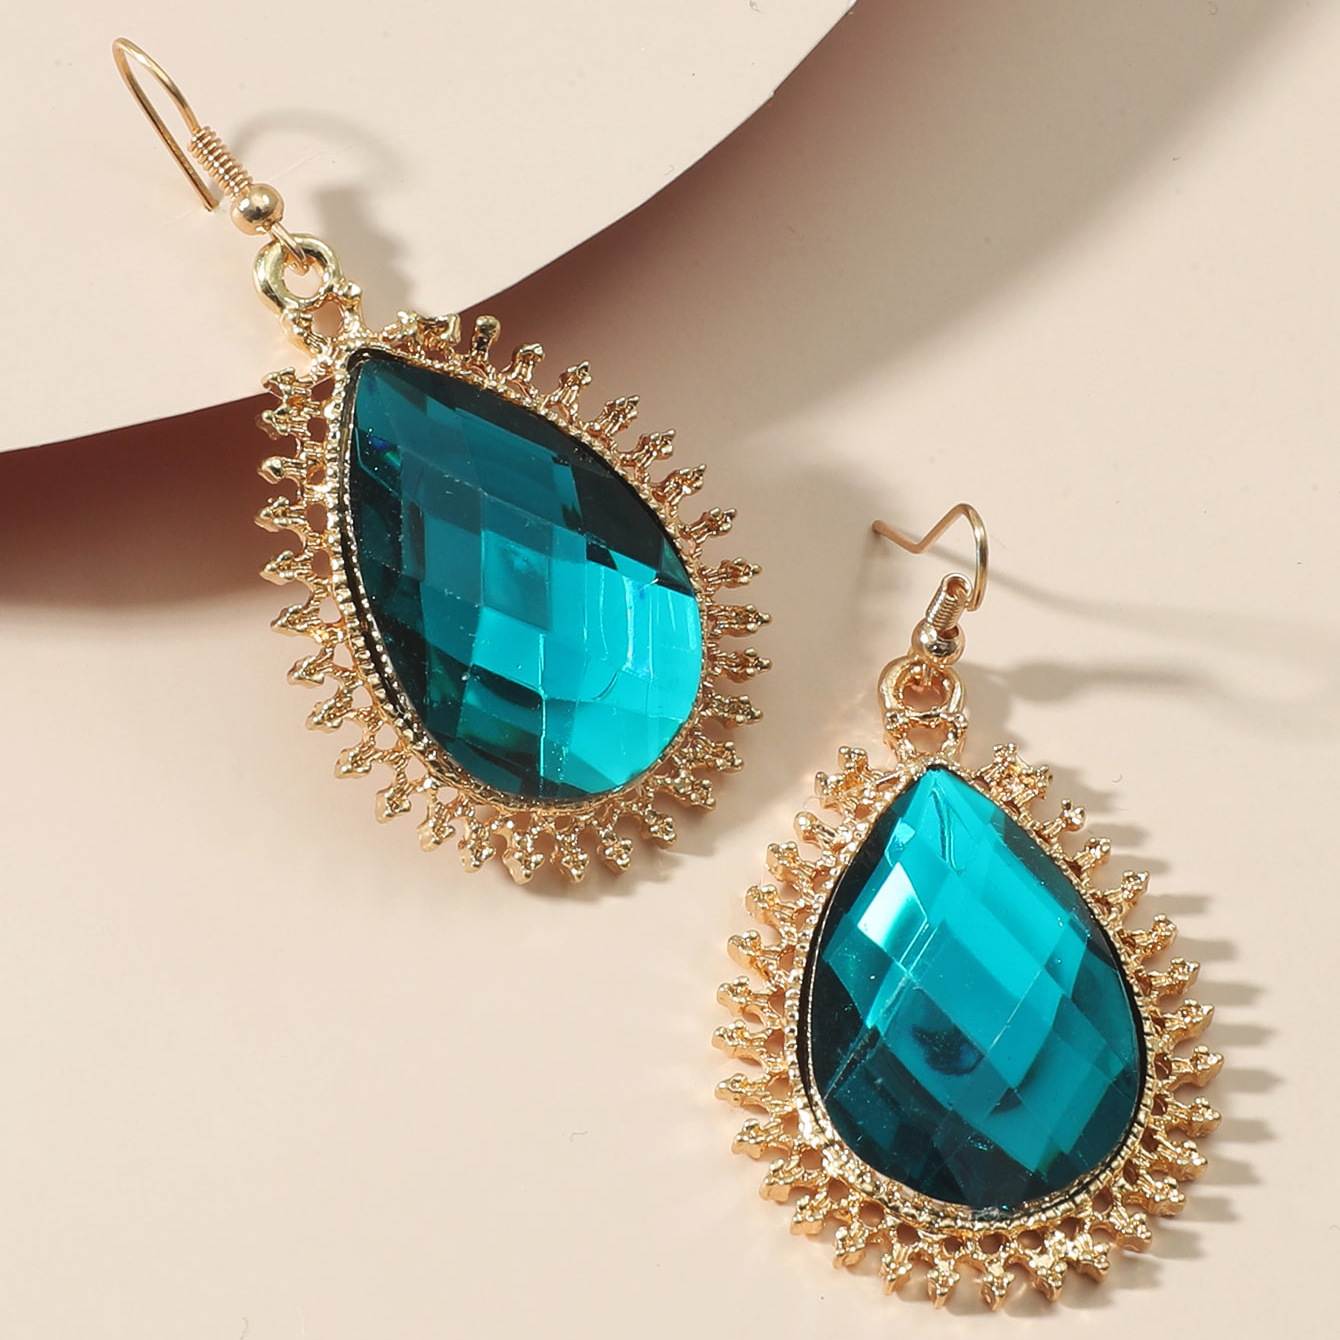 Fancy exaggerated pendant earrings